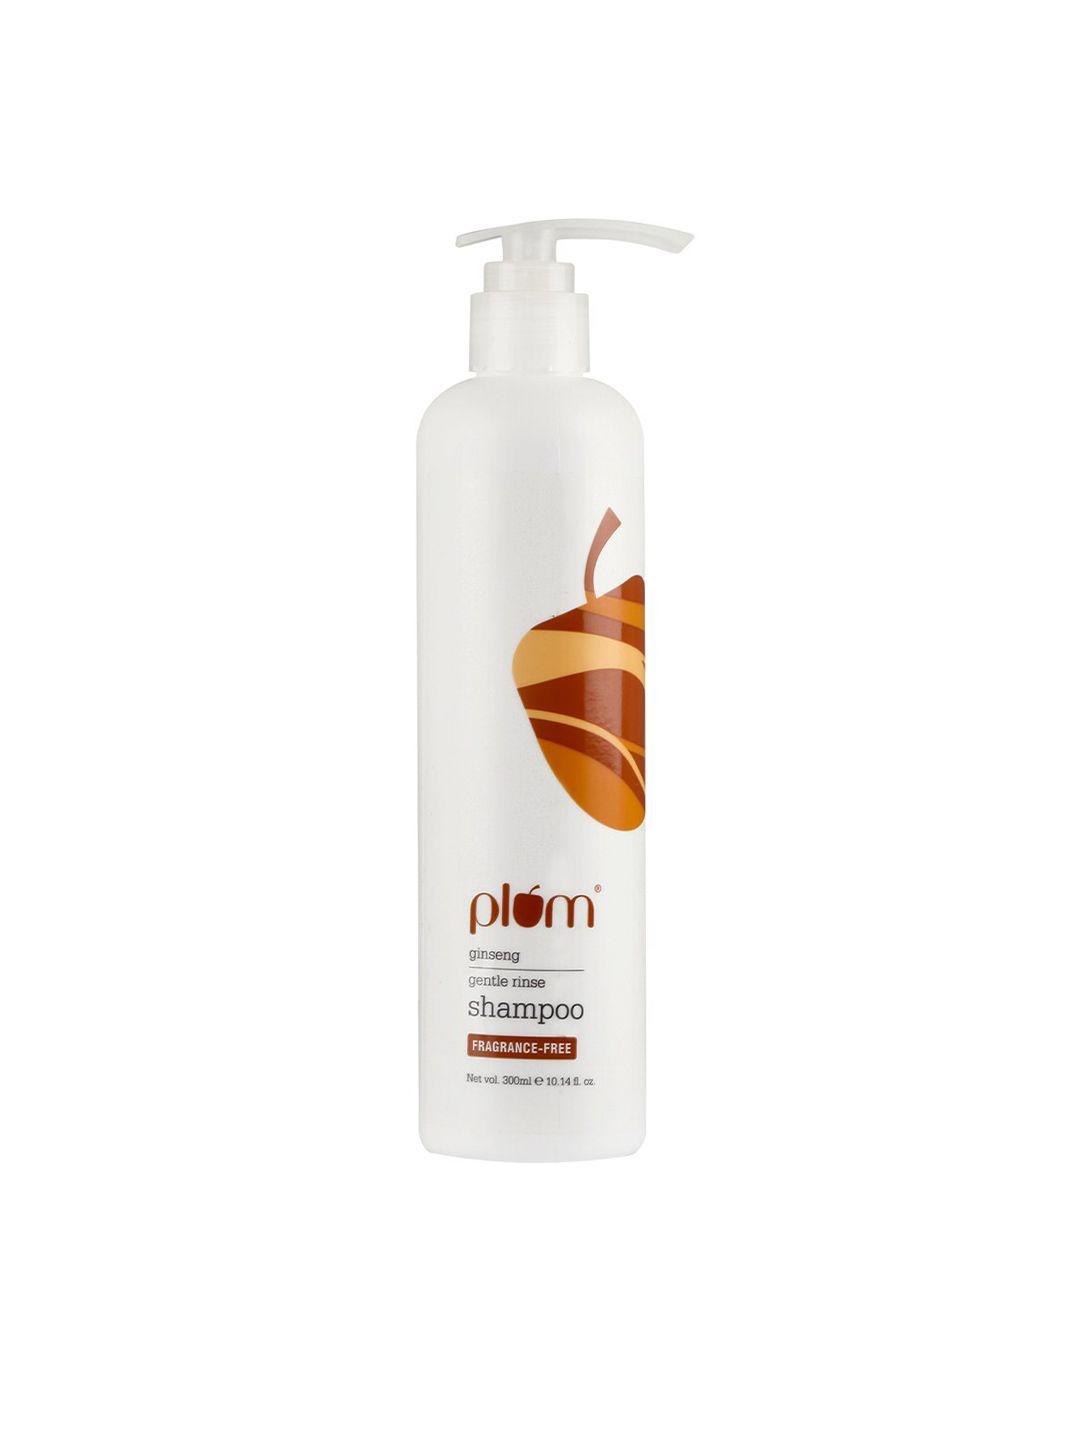 plum ginseng gentle rinse shampoo - 300 ml